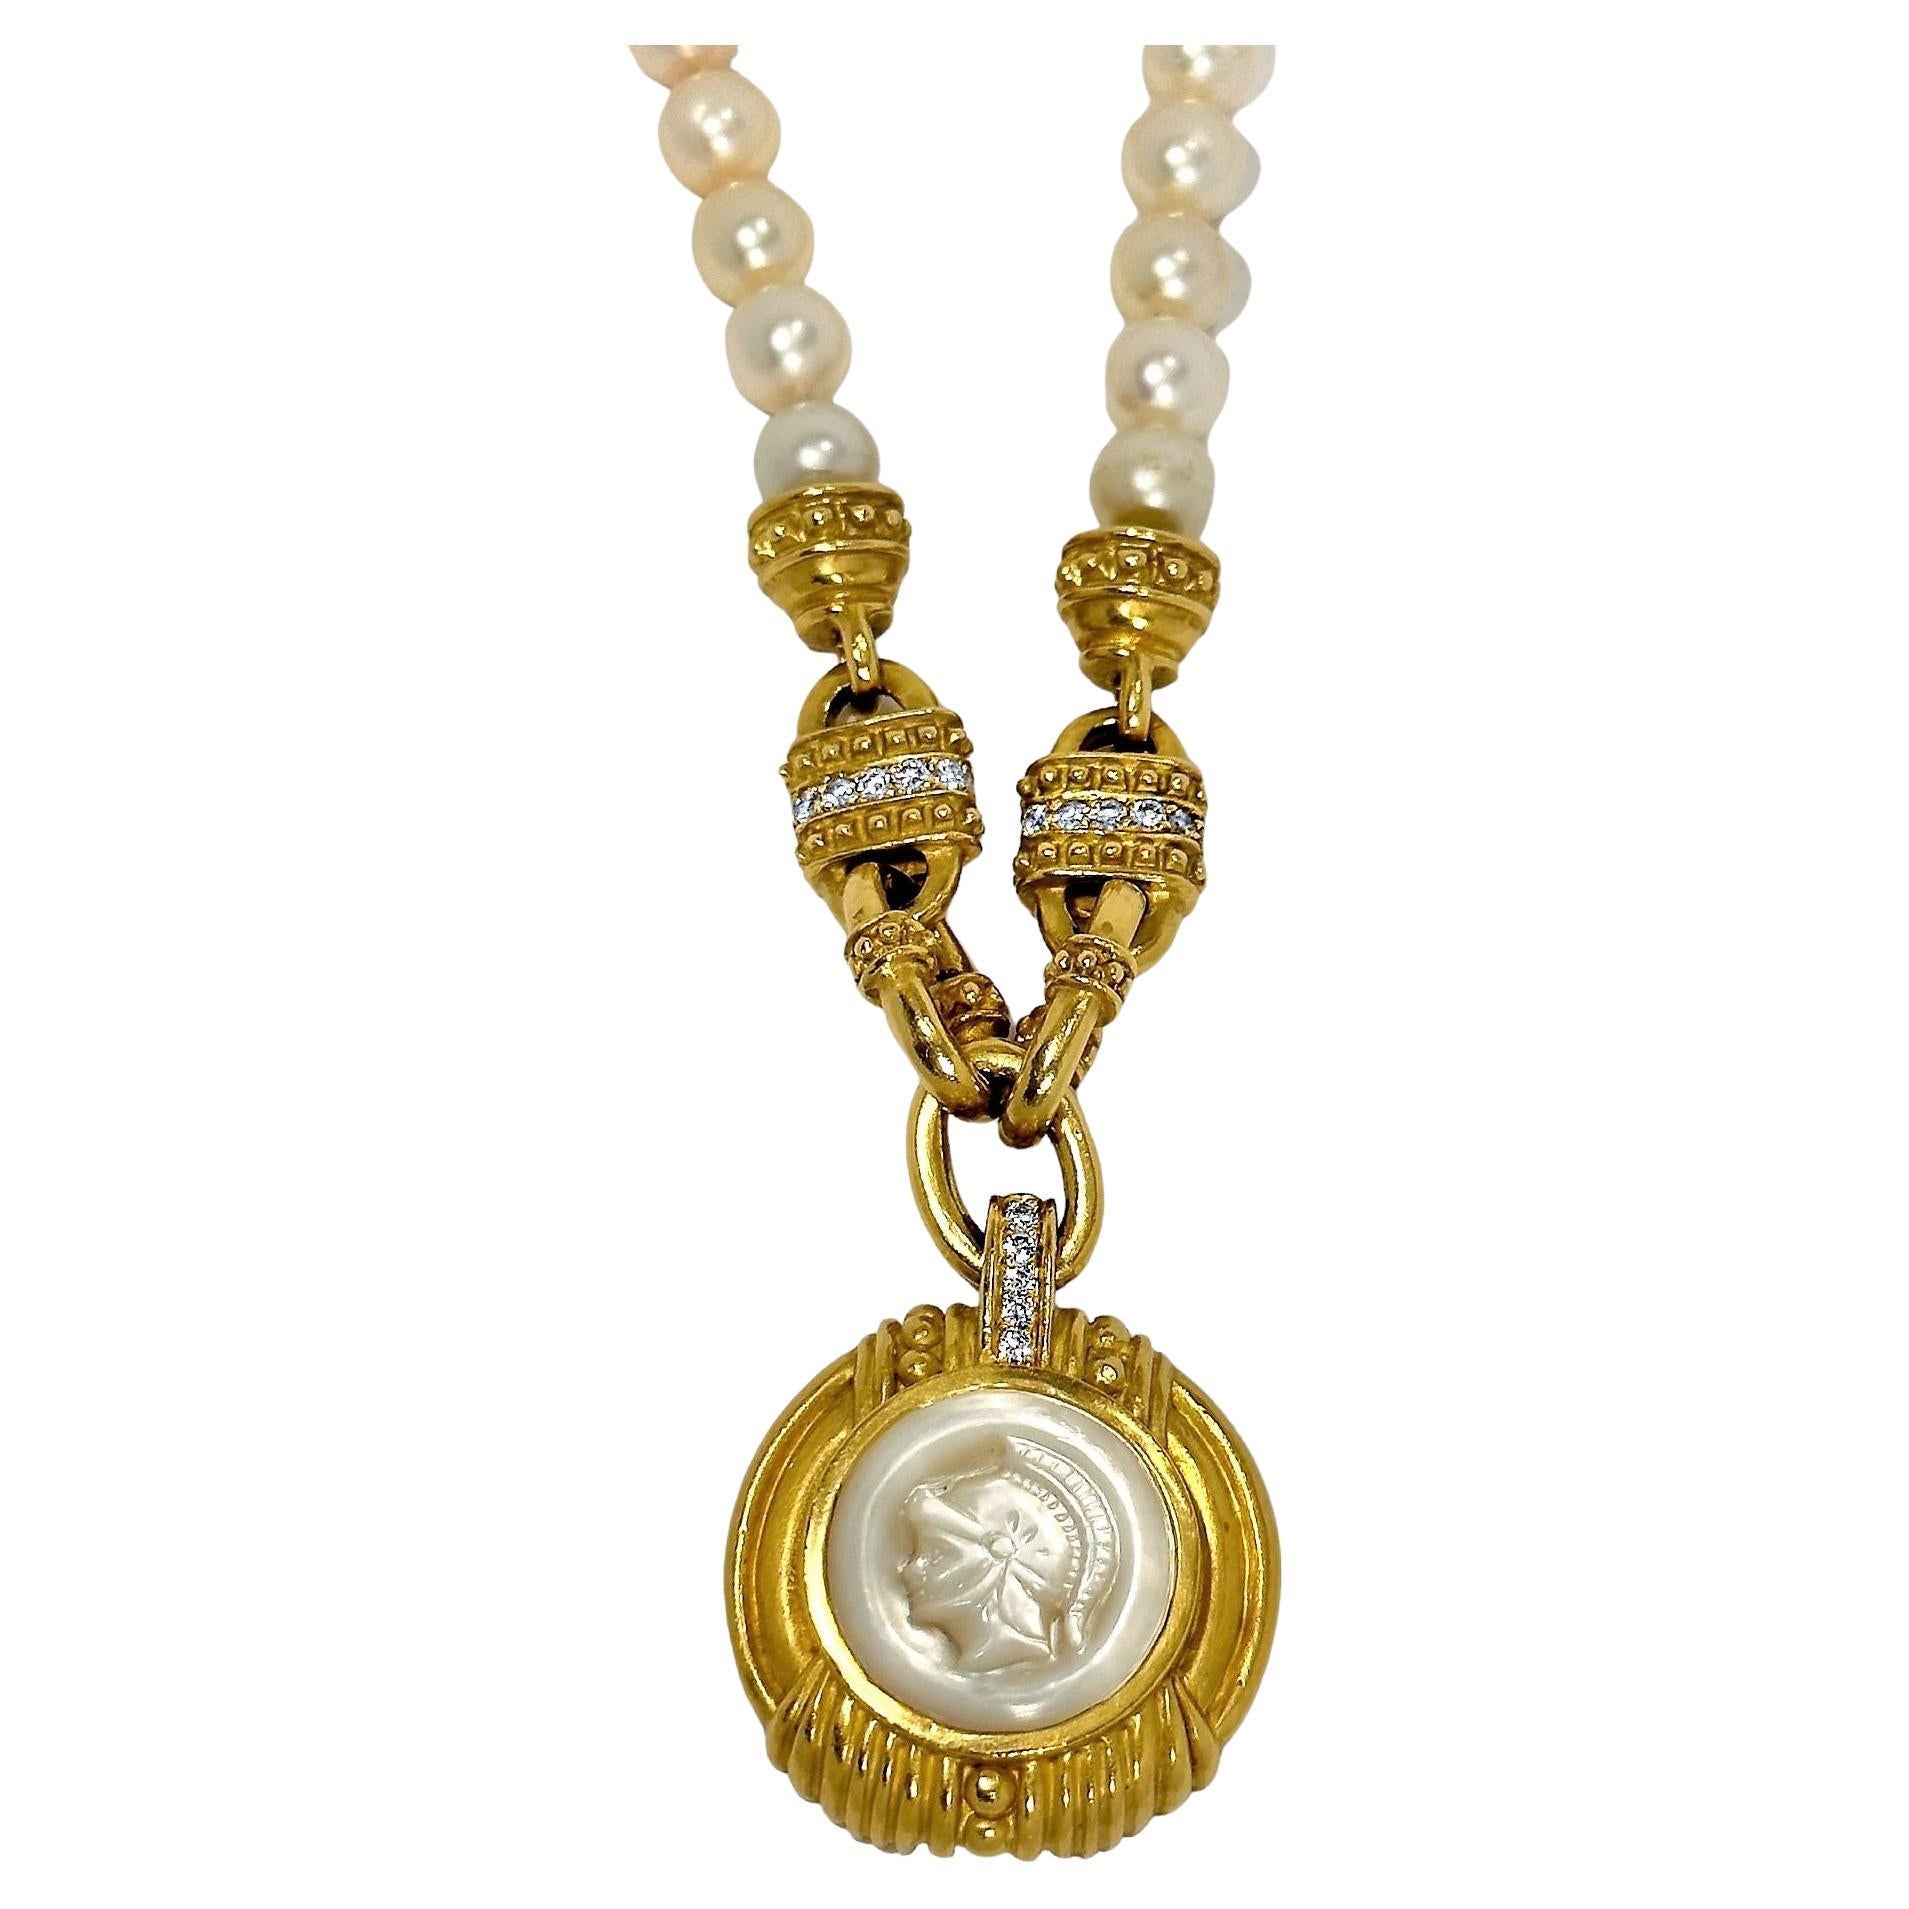 Judith Ripka 18k Gold Classic Revive Perlenkette mit besonderen Eigenschaften (Neoklassisch) im Angebot